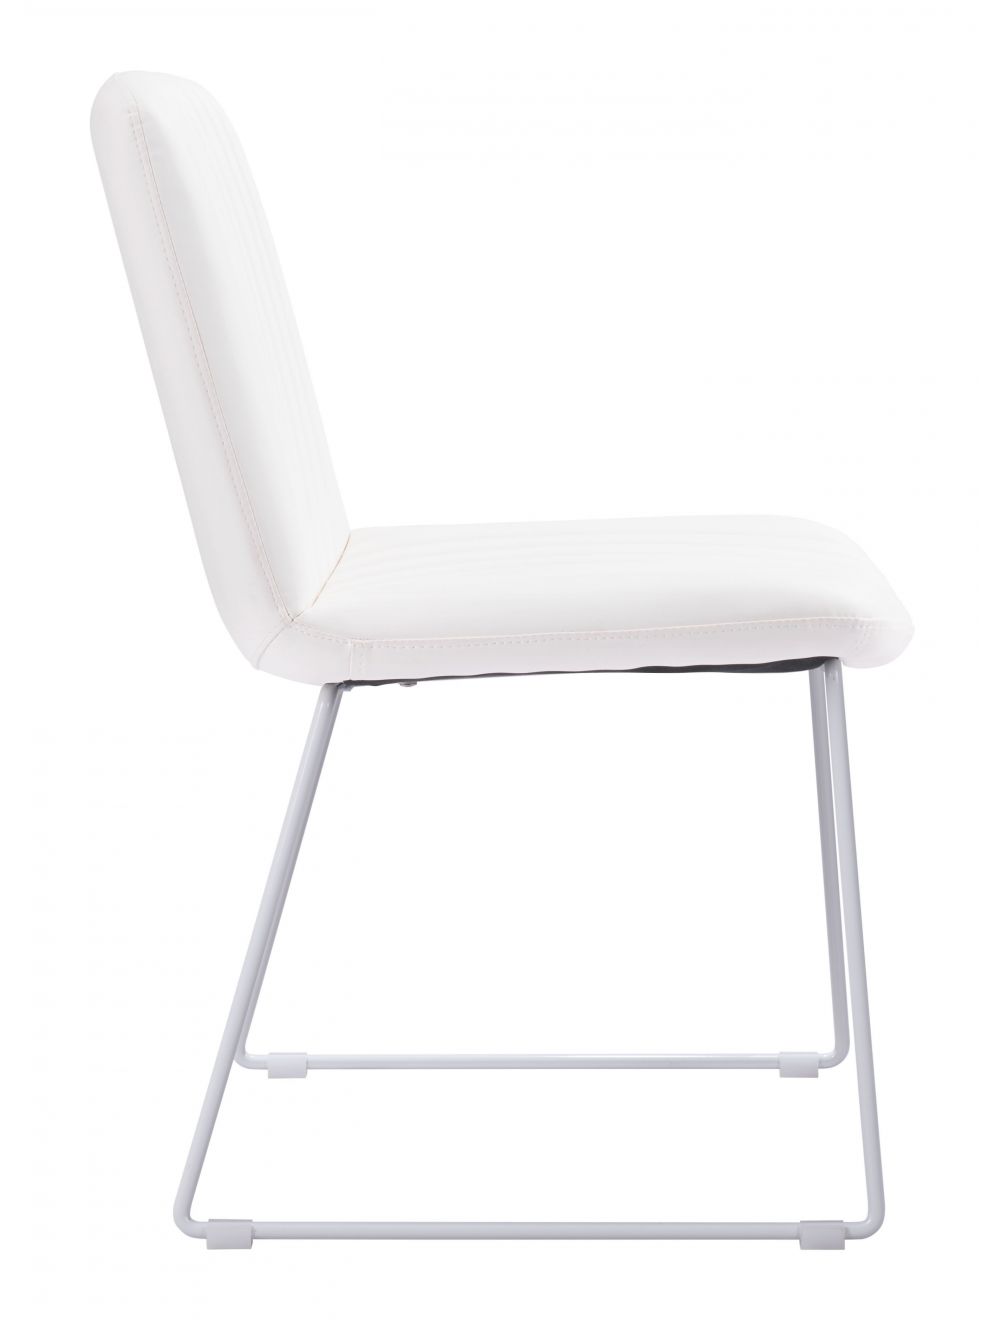 Joy Dining Chair (Set of 2) White